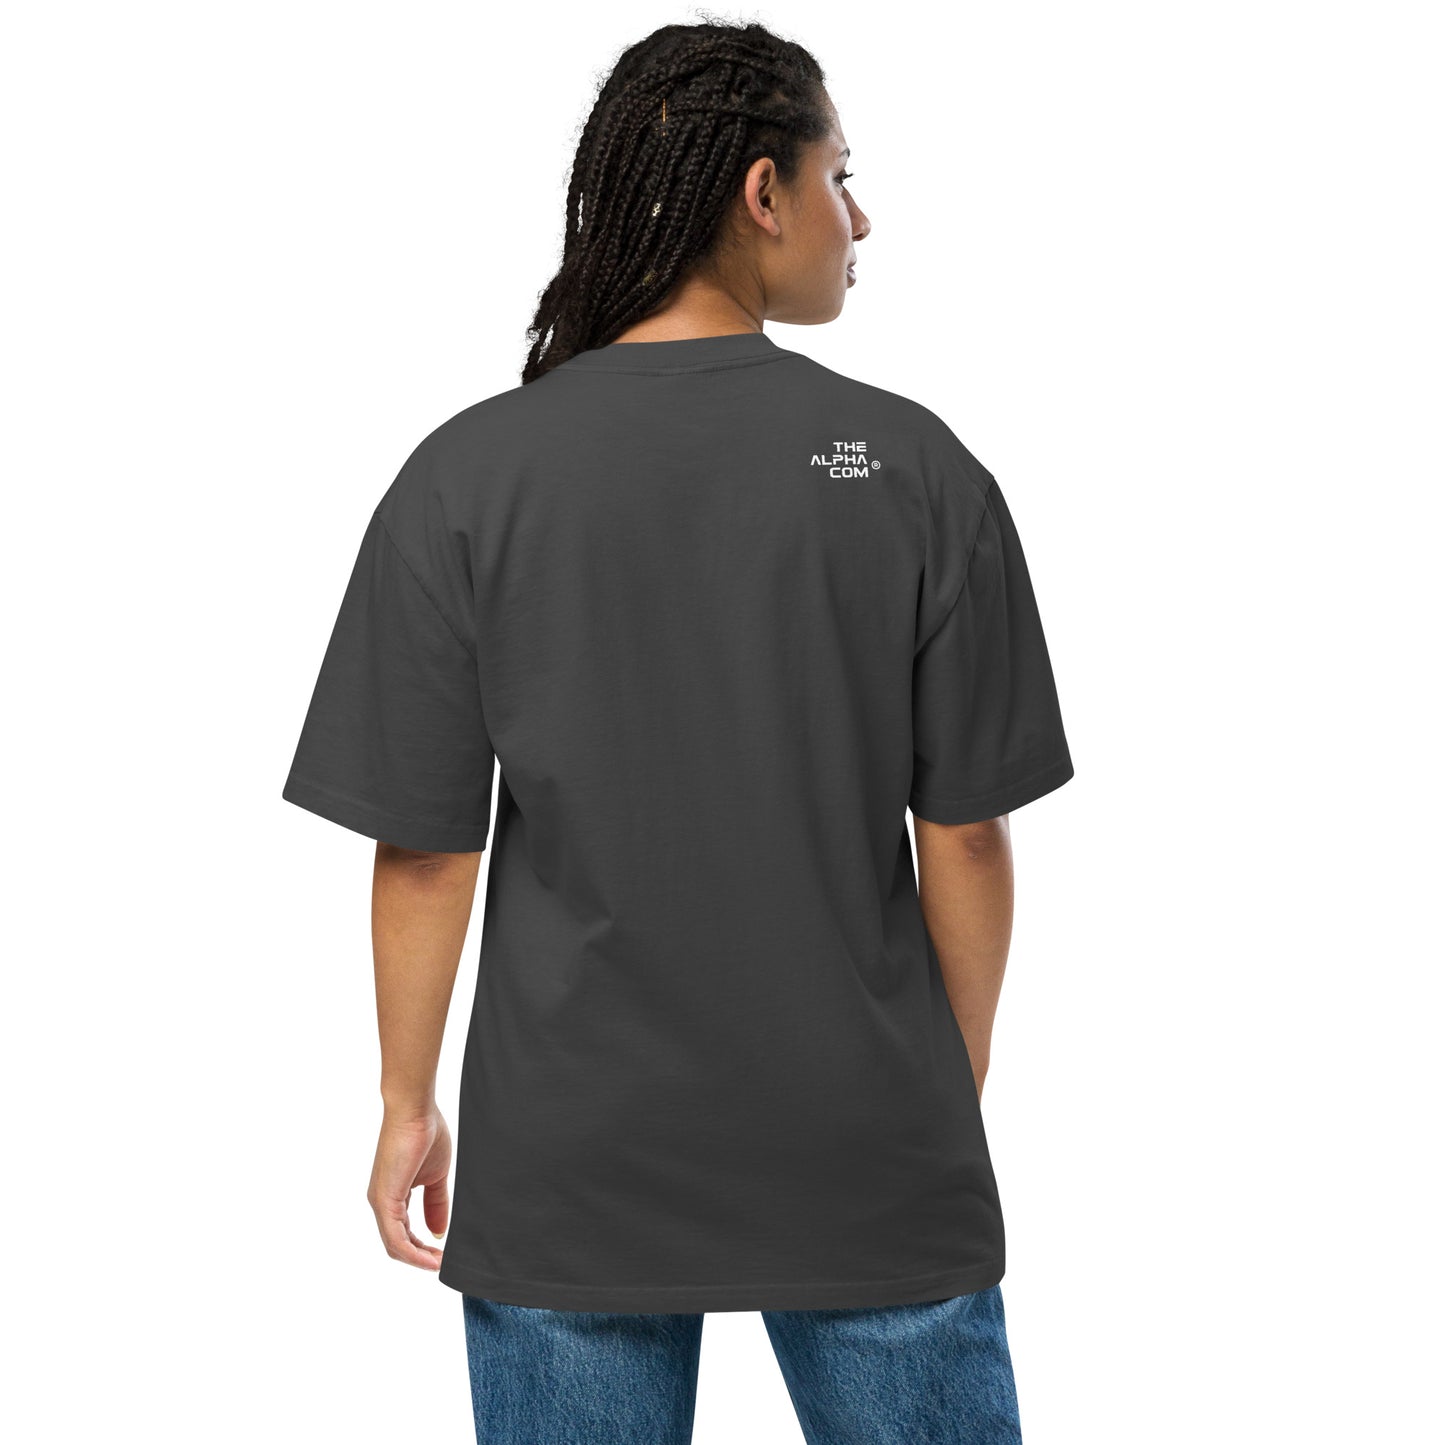 THE ALPHA COM ® ADN Oversized faded t-shirt - THE ALPHA